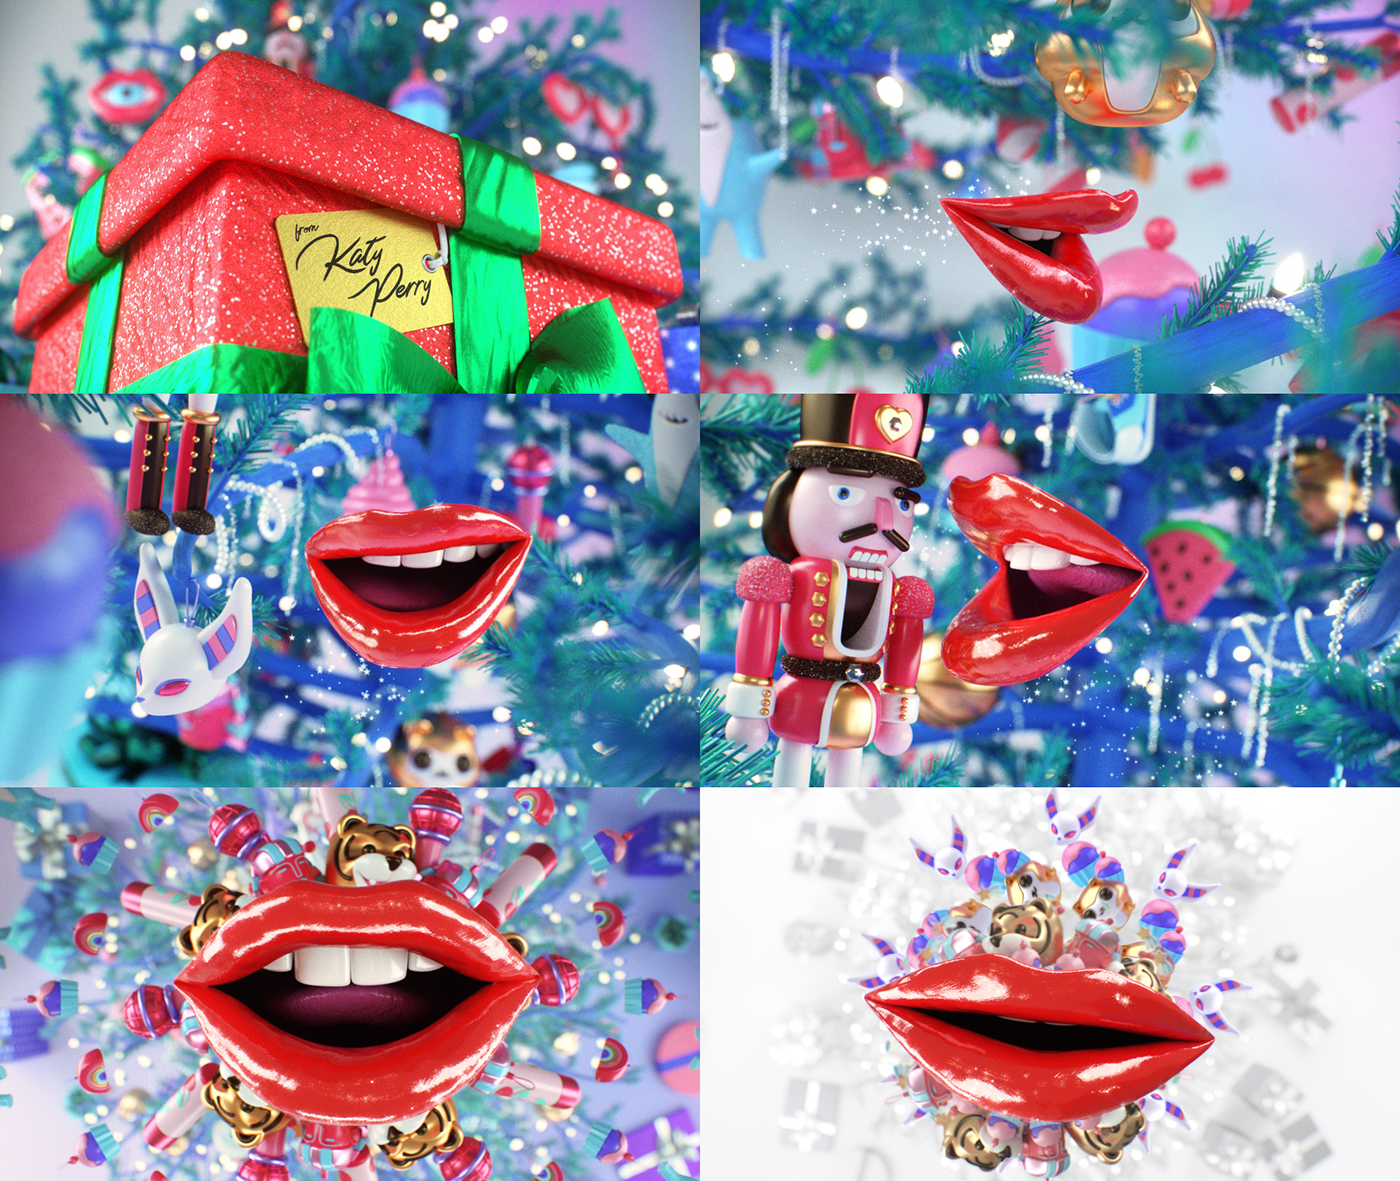 animation  cinema 4d c4d design Katy Perry Amazon Christmas modeling 3D ornaments